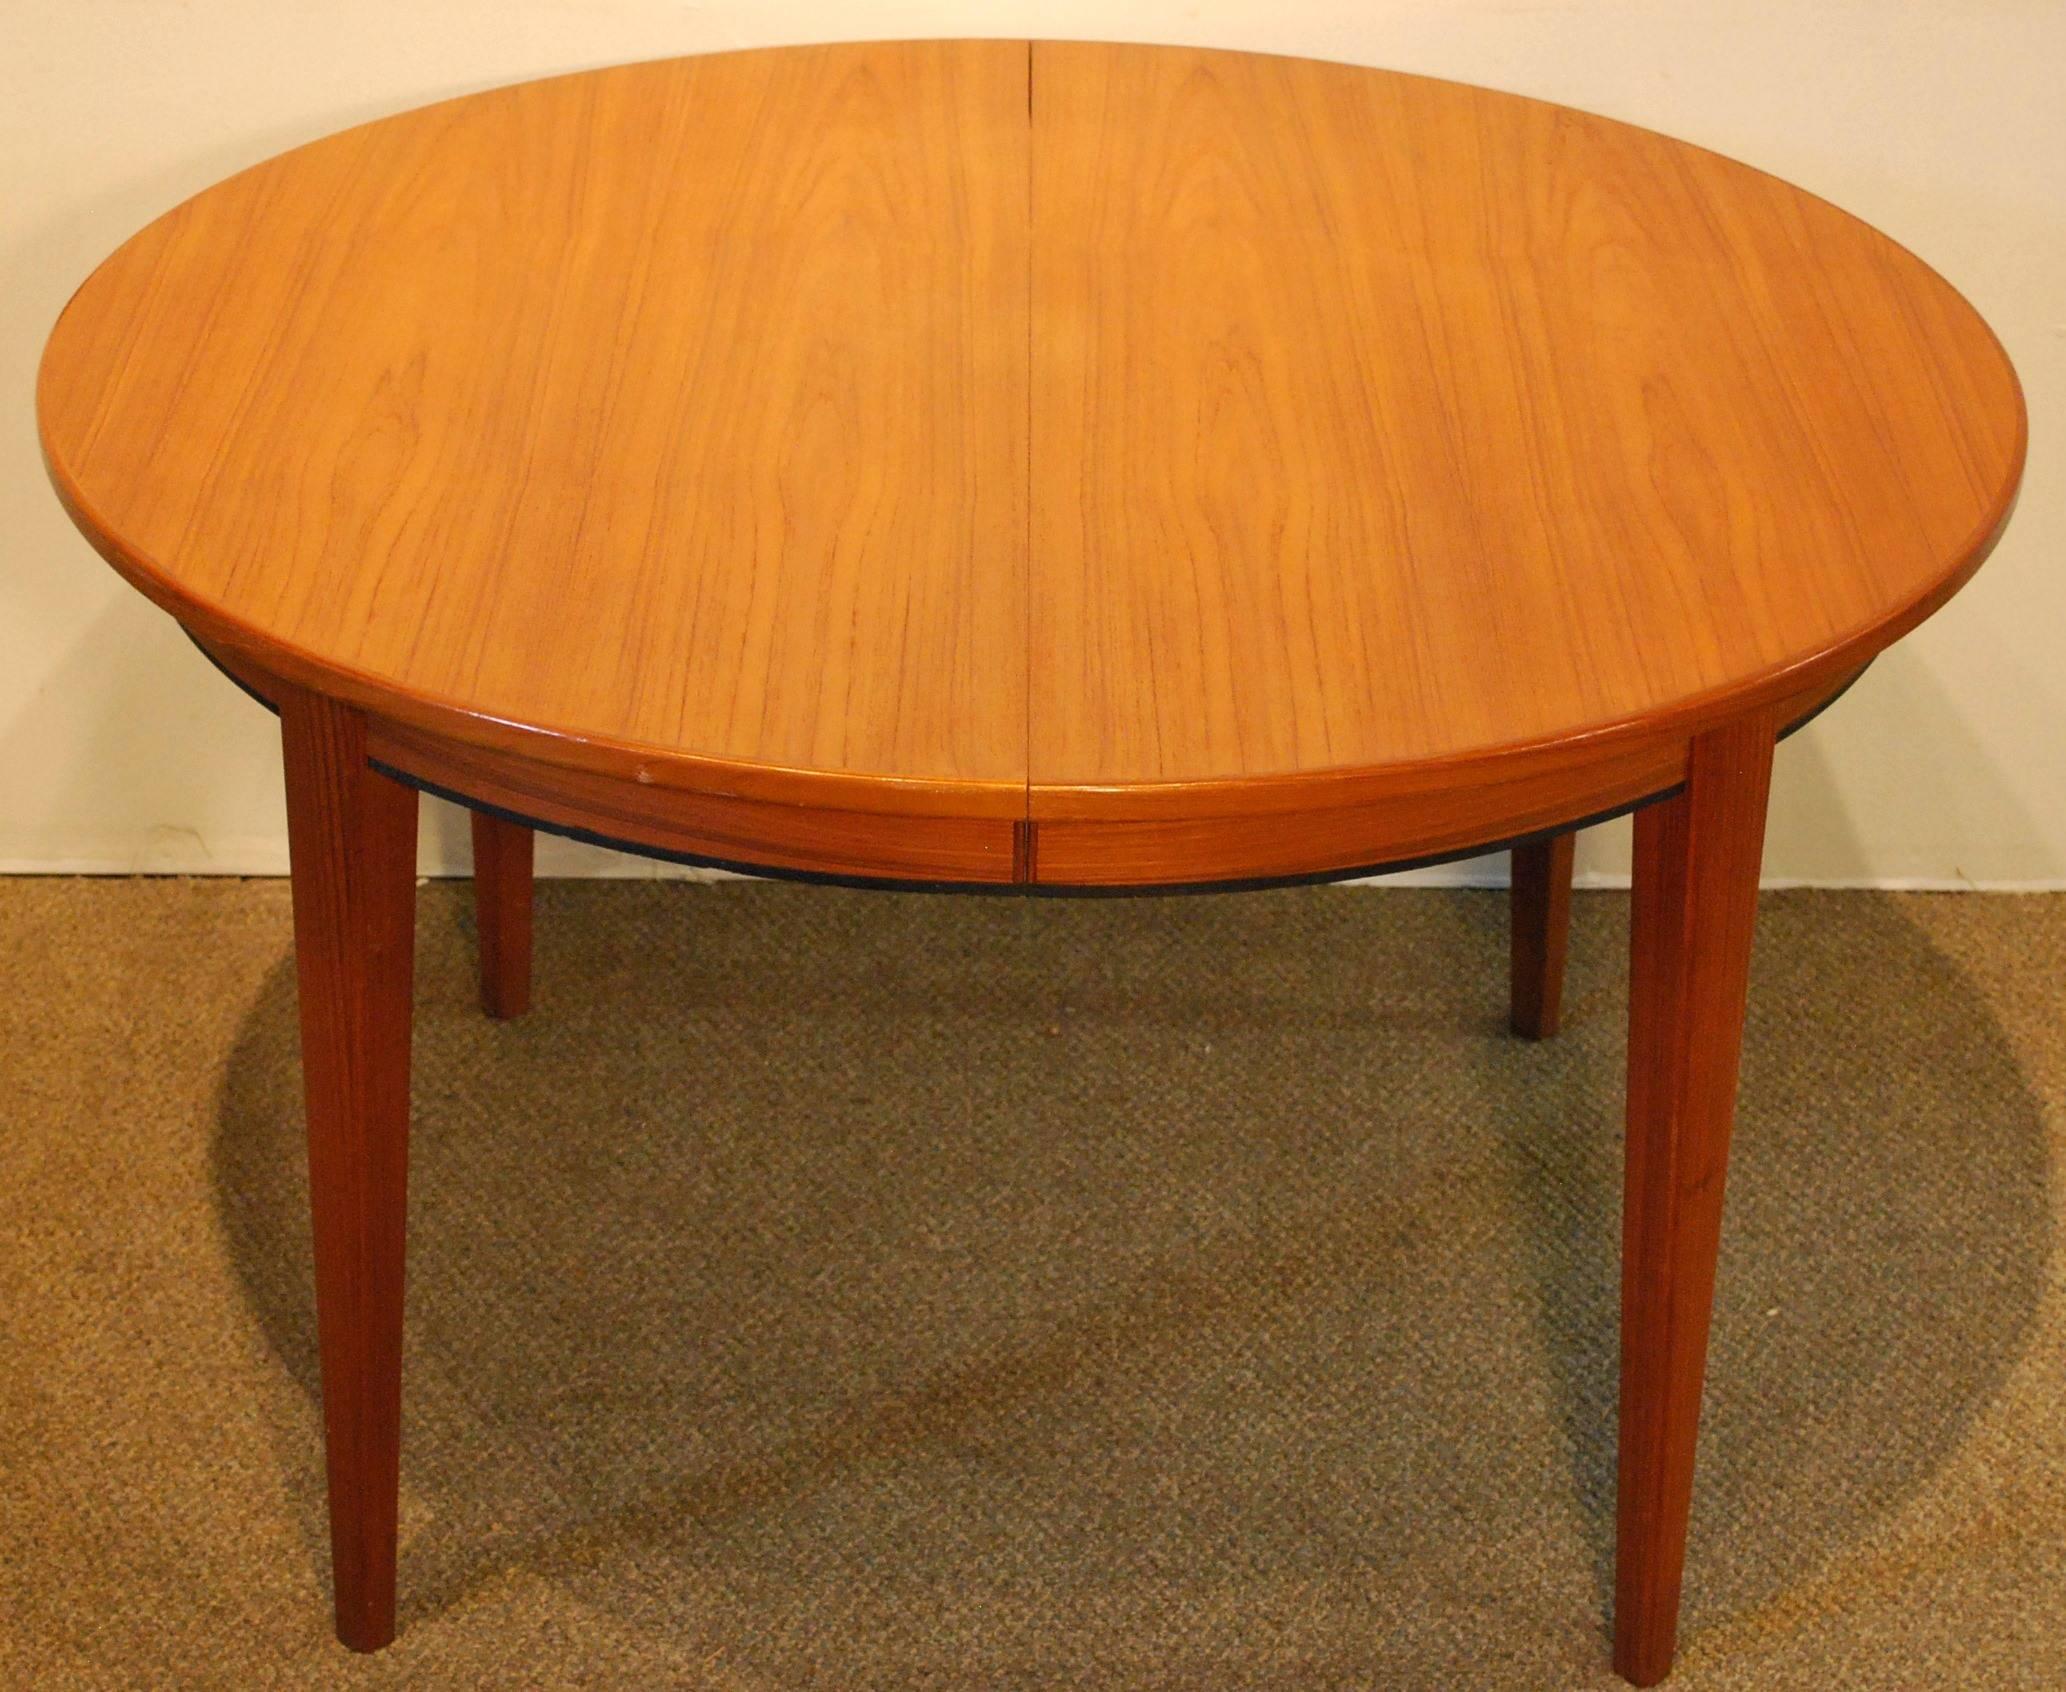 Scandinavian Modern Gunni Omann Designed Mid-Century Teak Table with Three Leaves, circa 1960 For Sale